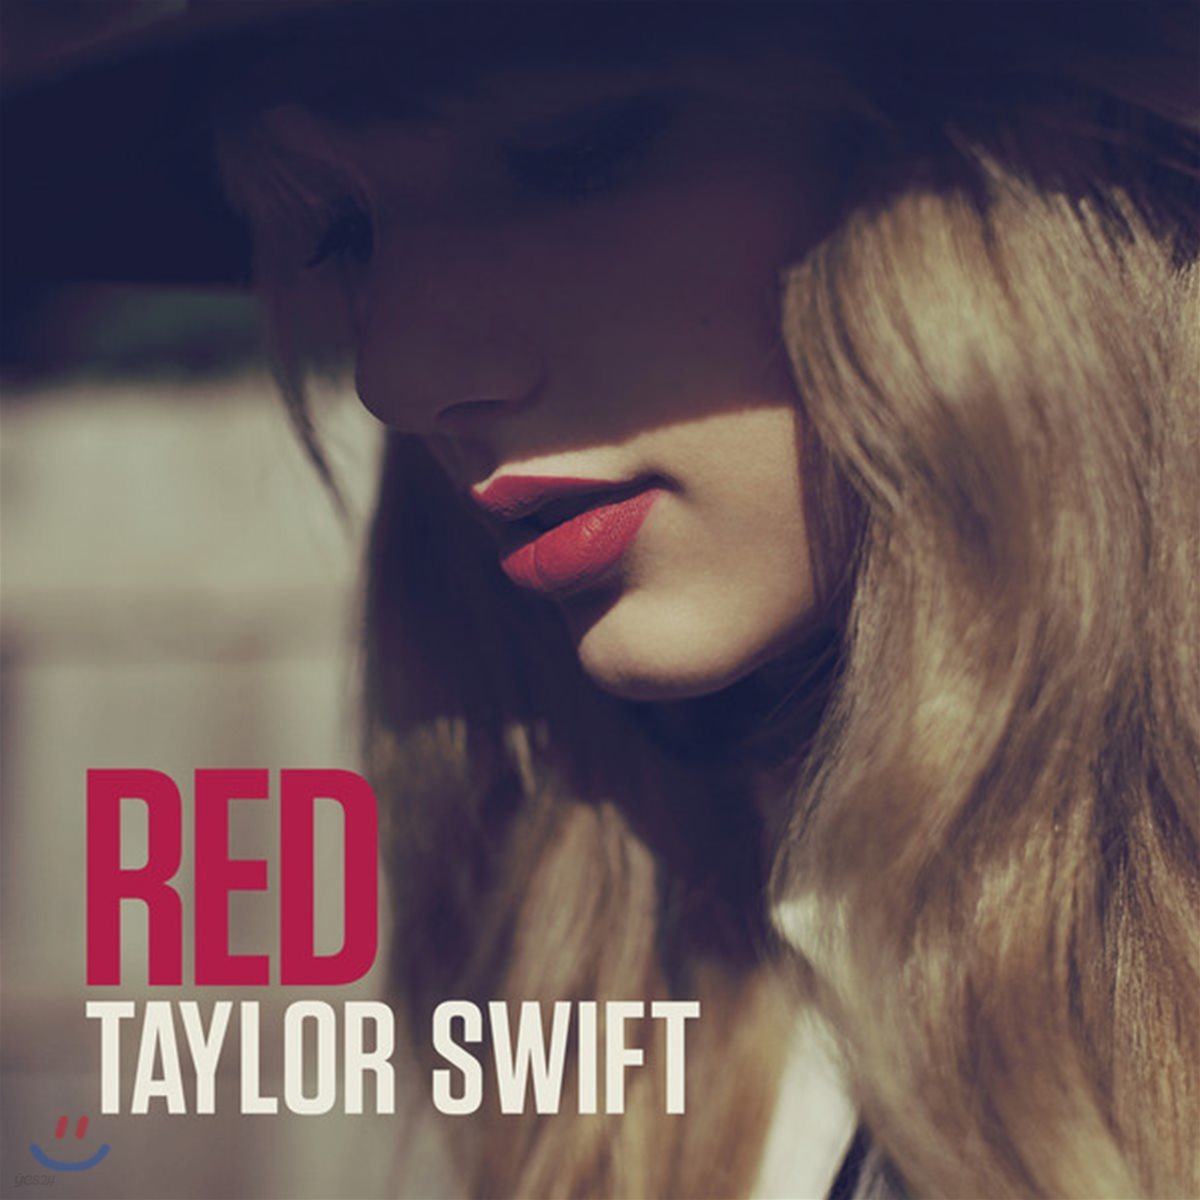 Taylor Swift (테일러 스위프트) - Red 정규 4집 [크리스털 투명 컬러 2LP]